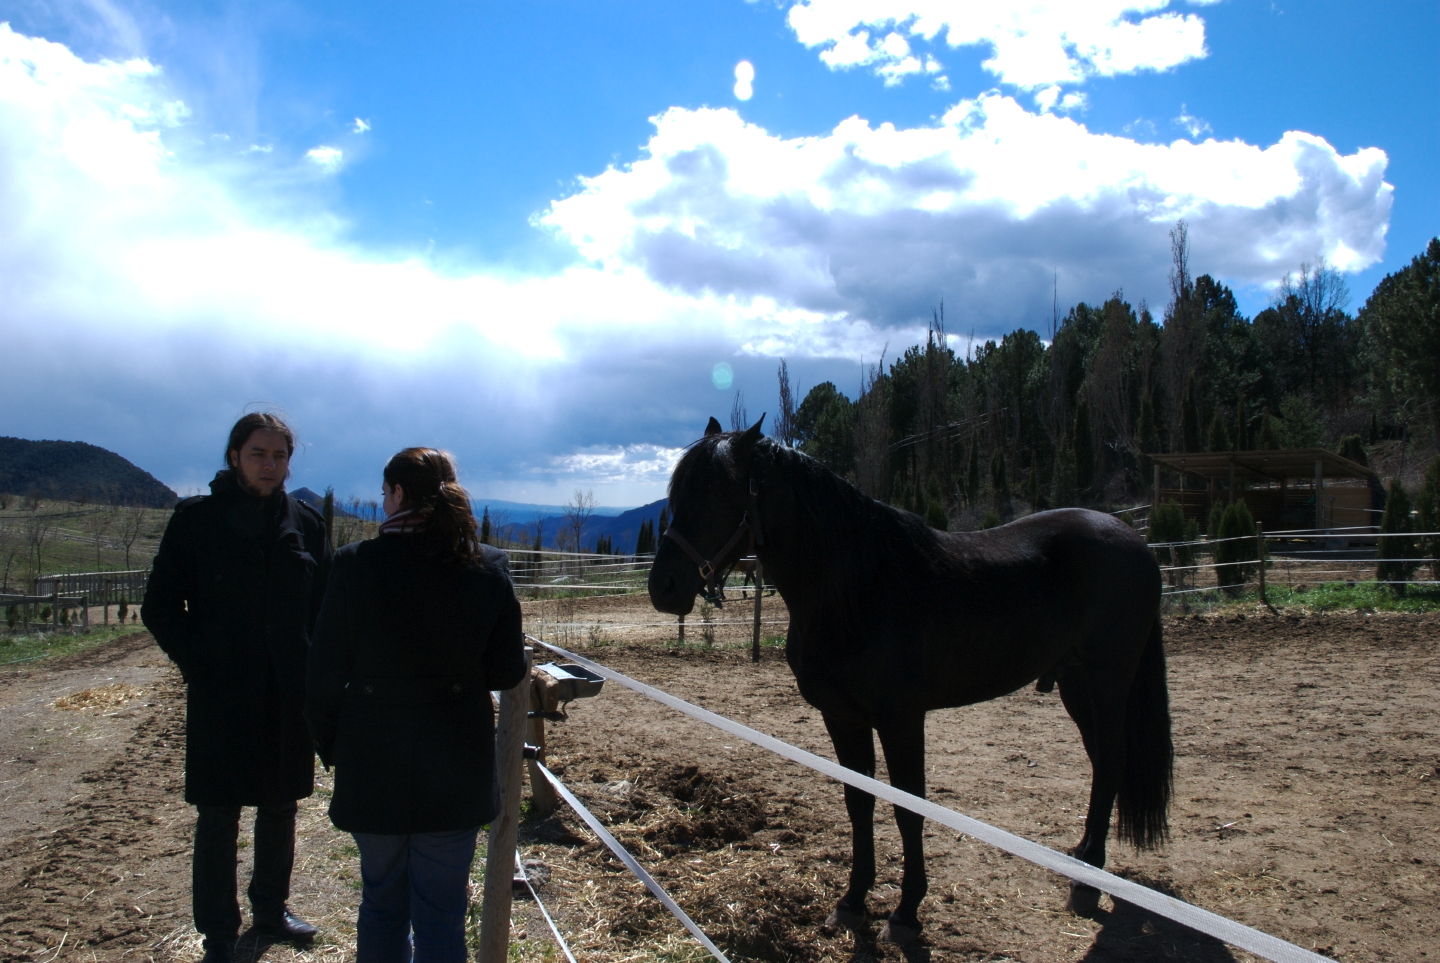 Bernat, Francine, Horse